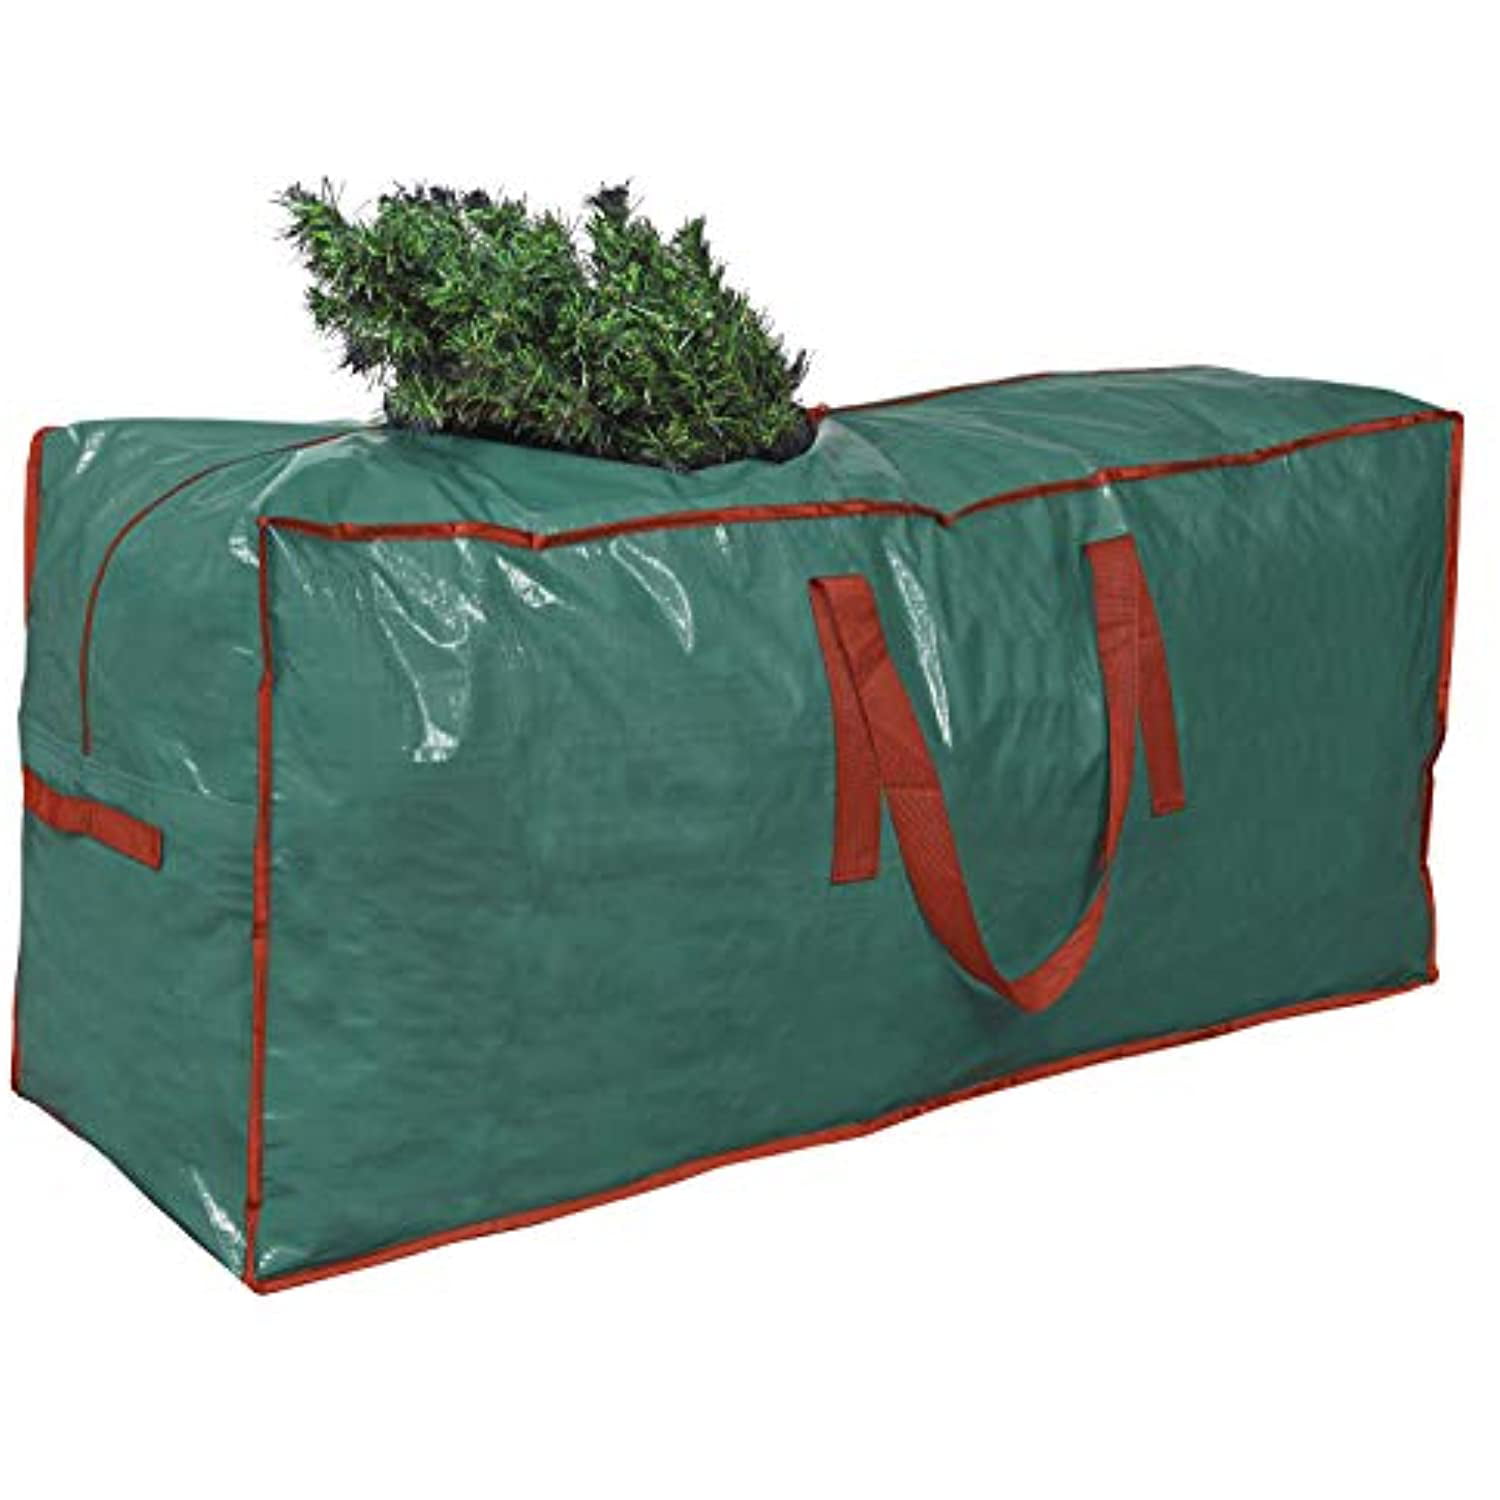 Christmas Storage Bag Waterproof Oxford Fabric Xmas Holiday Tree Bag Zippered Artificial Tree Bag with Handles 68.1 x 29.9 x 20 